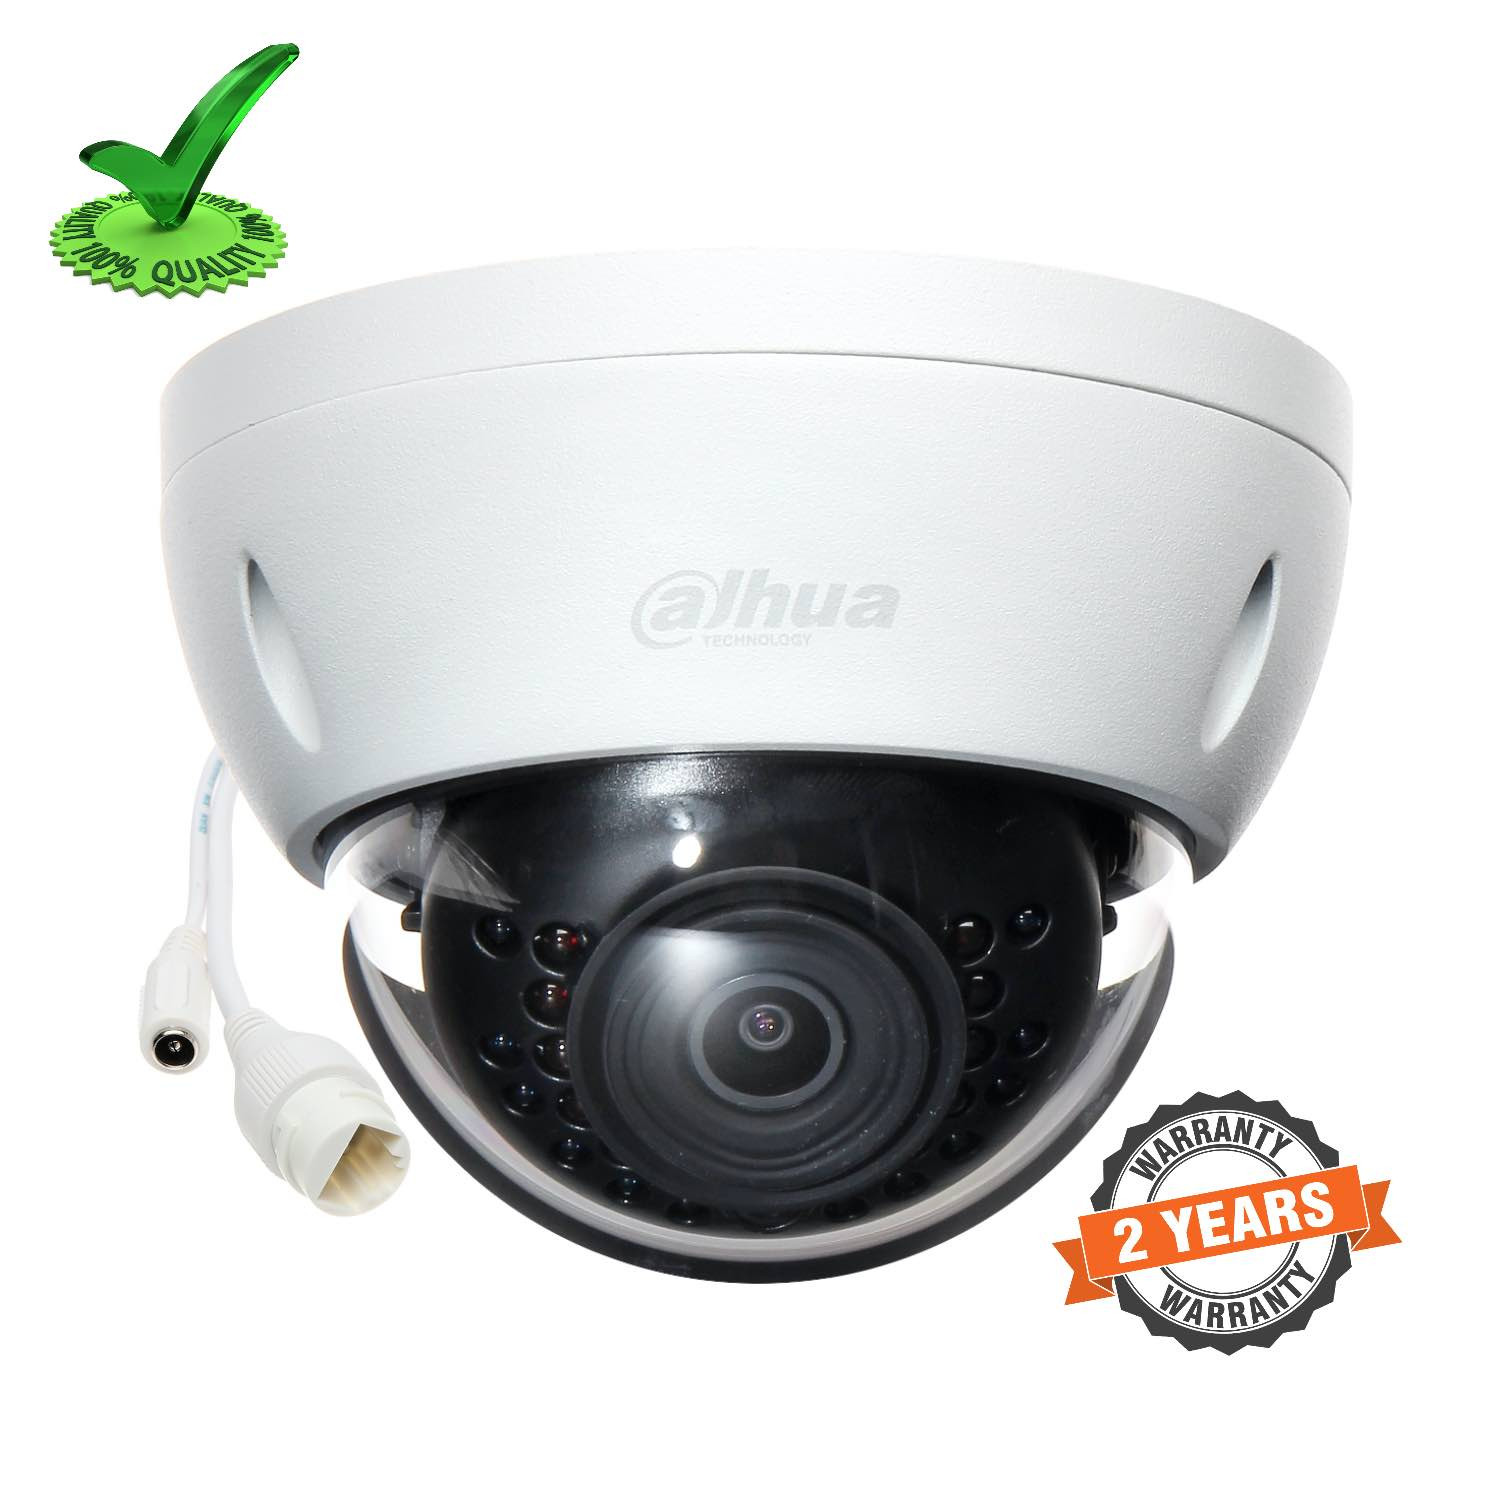 Dahua DH-IPC-HDBW14B0EP 4MP Vision IR Mini-Dome Network IP Camera